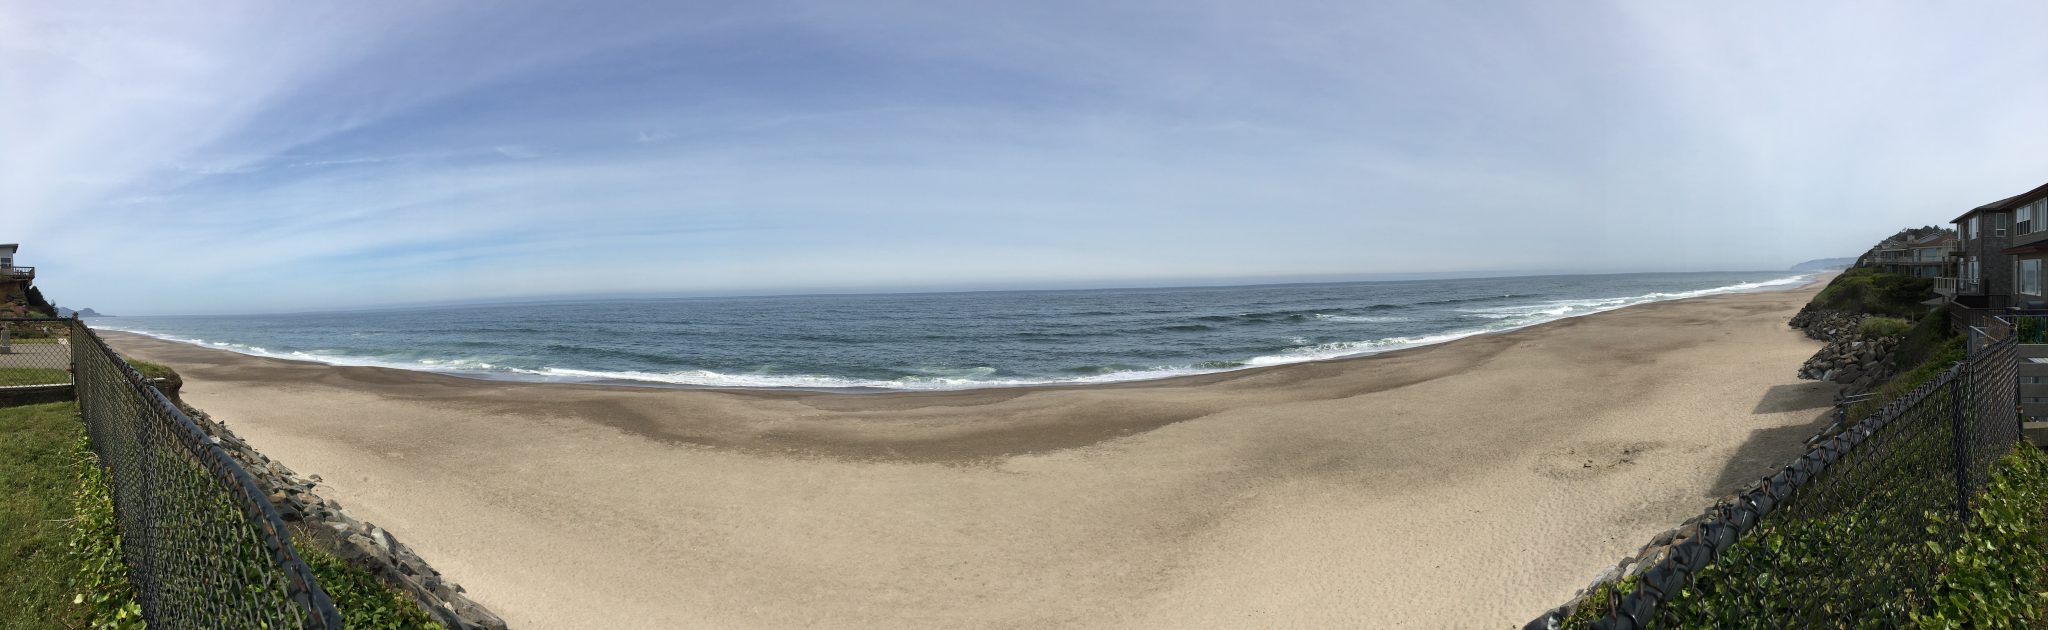 View from Oceanfront Solitude - Gleneden Beach, Oregon